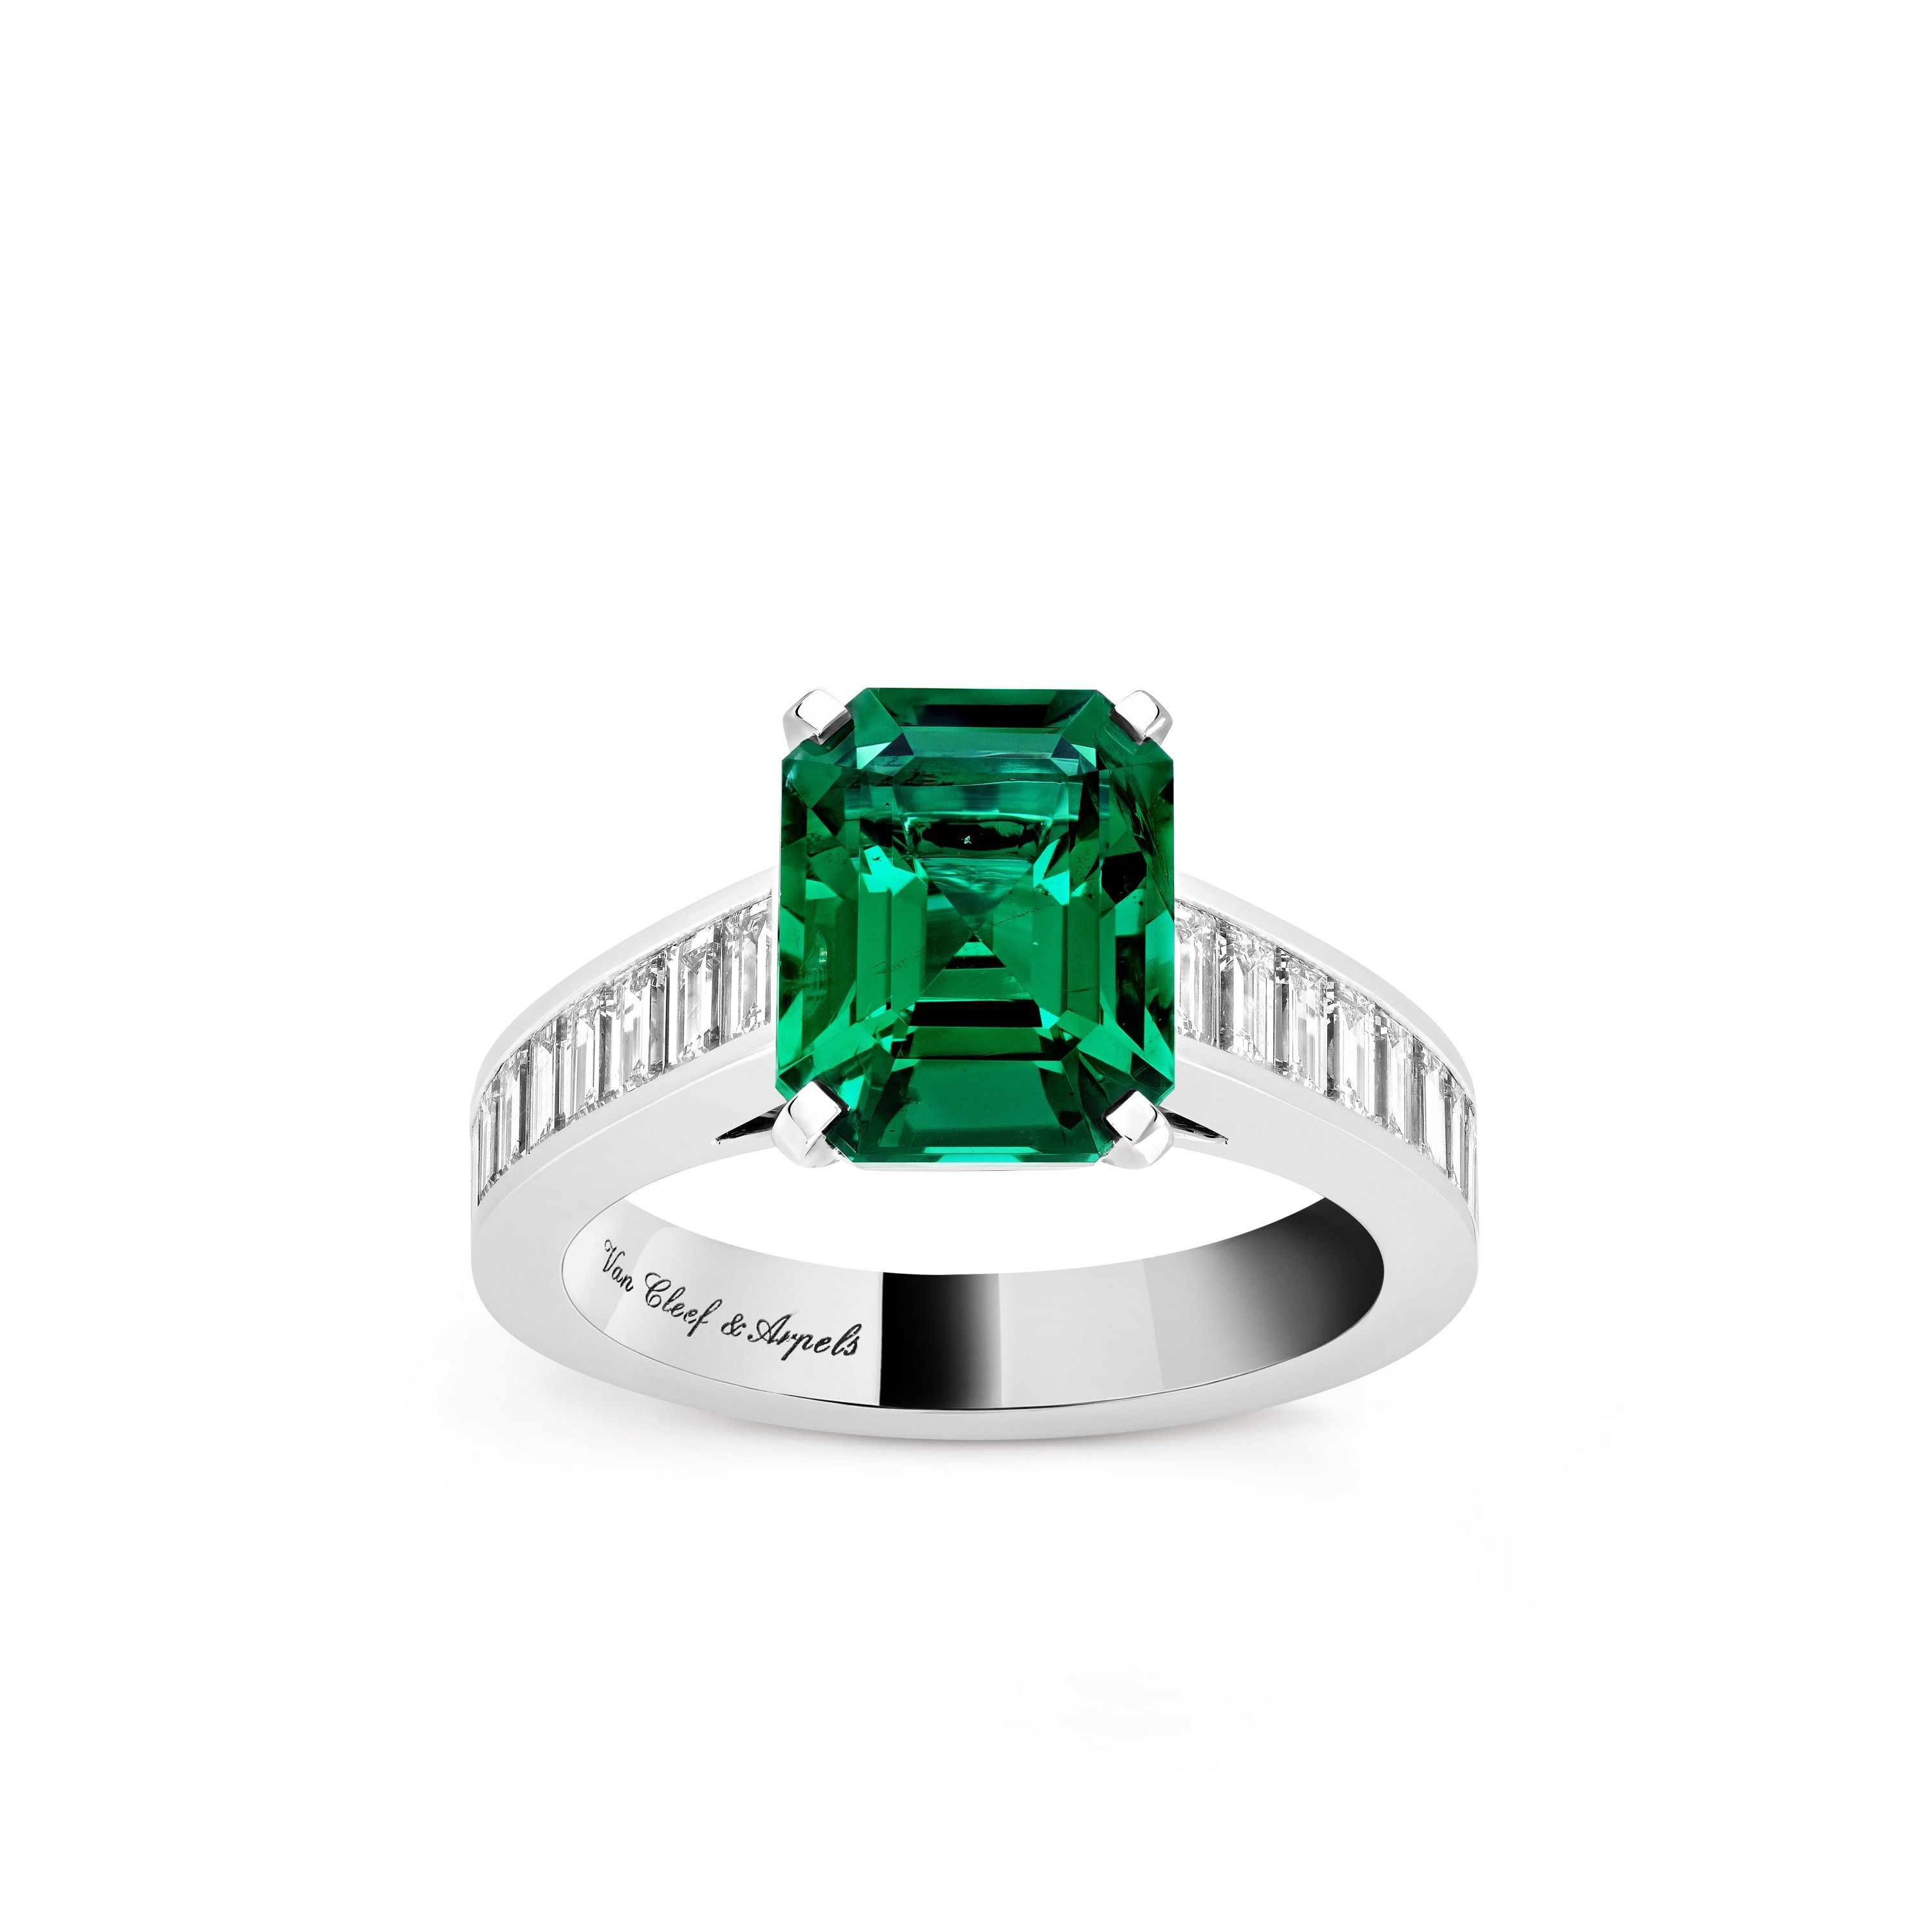 Mini Emerald Ring | Choose your emerald! – From Isla